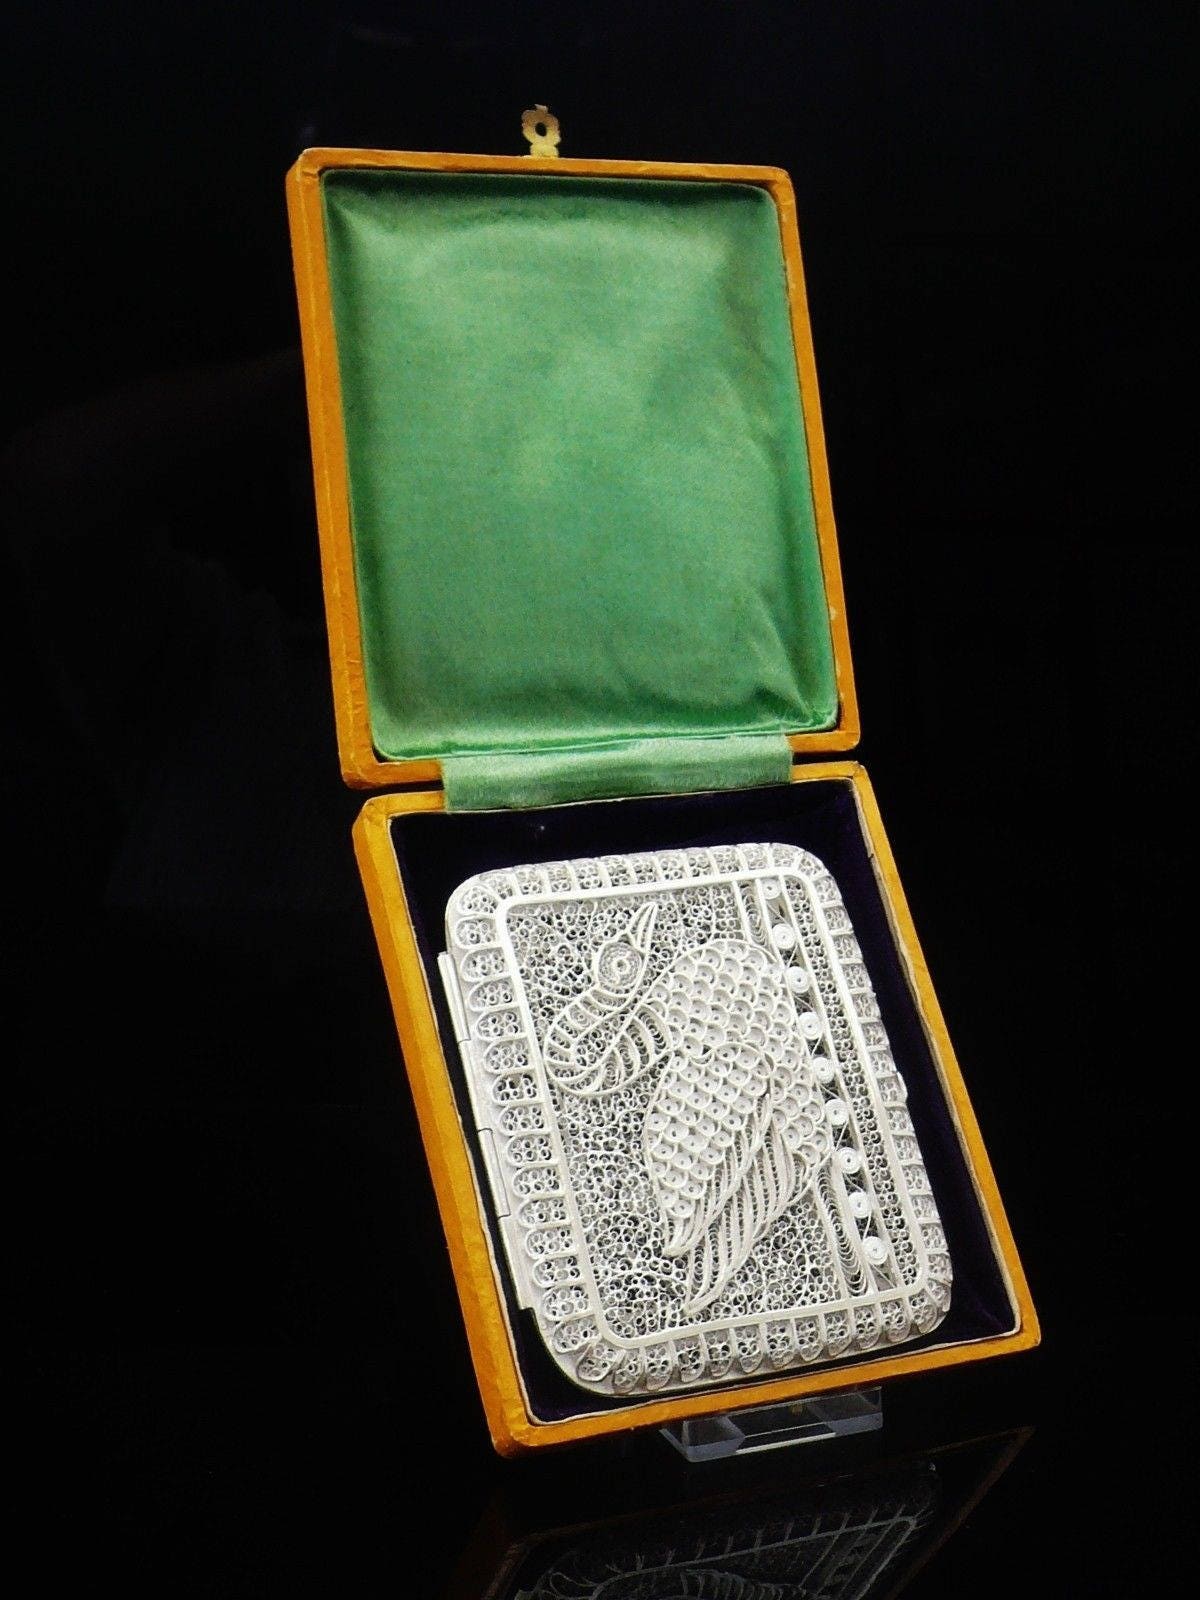 Vintage Sterling Silver Cigarette Case, 1920s Hallmarks, Silver Pocket Case,  Silver Jewellery Case, Solid Silver Case 